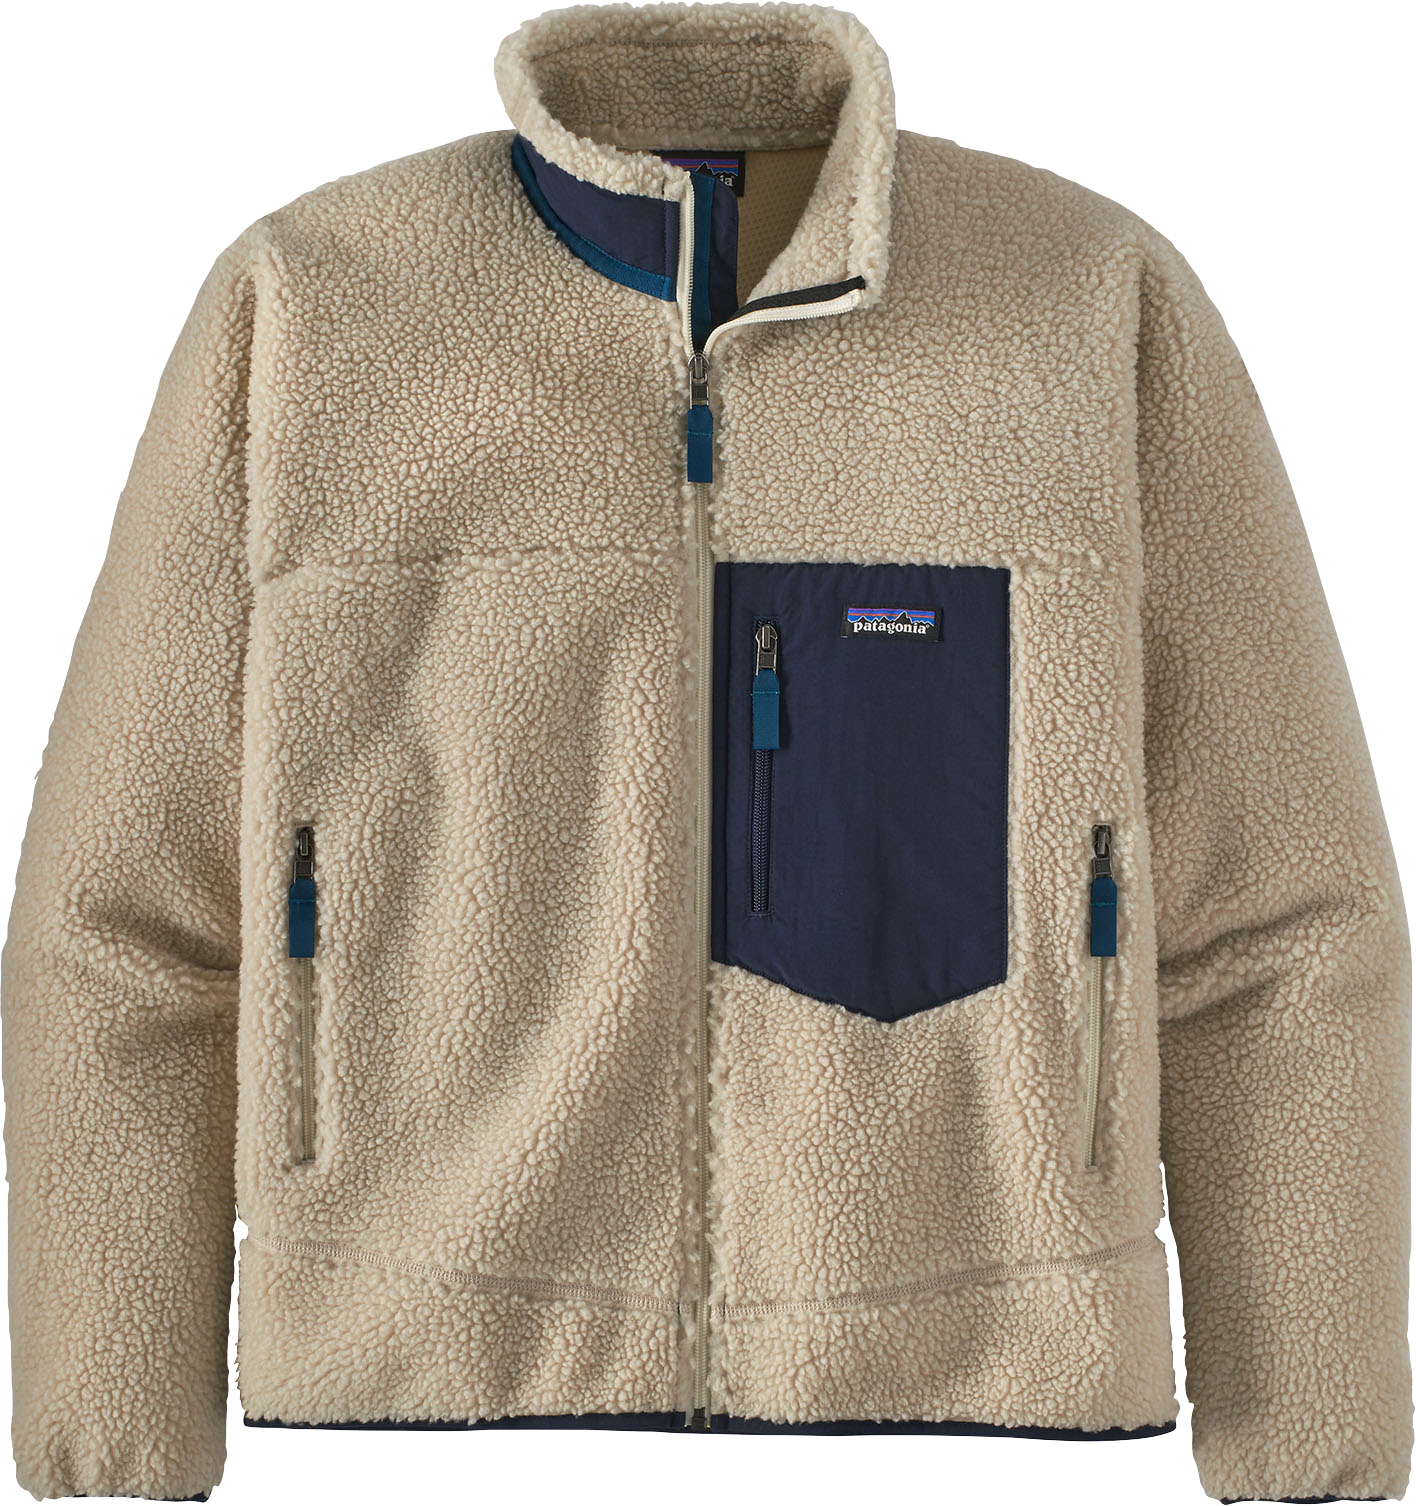 Patagonia Classic Retro-X Jacket - Men's - Clothing